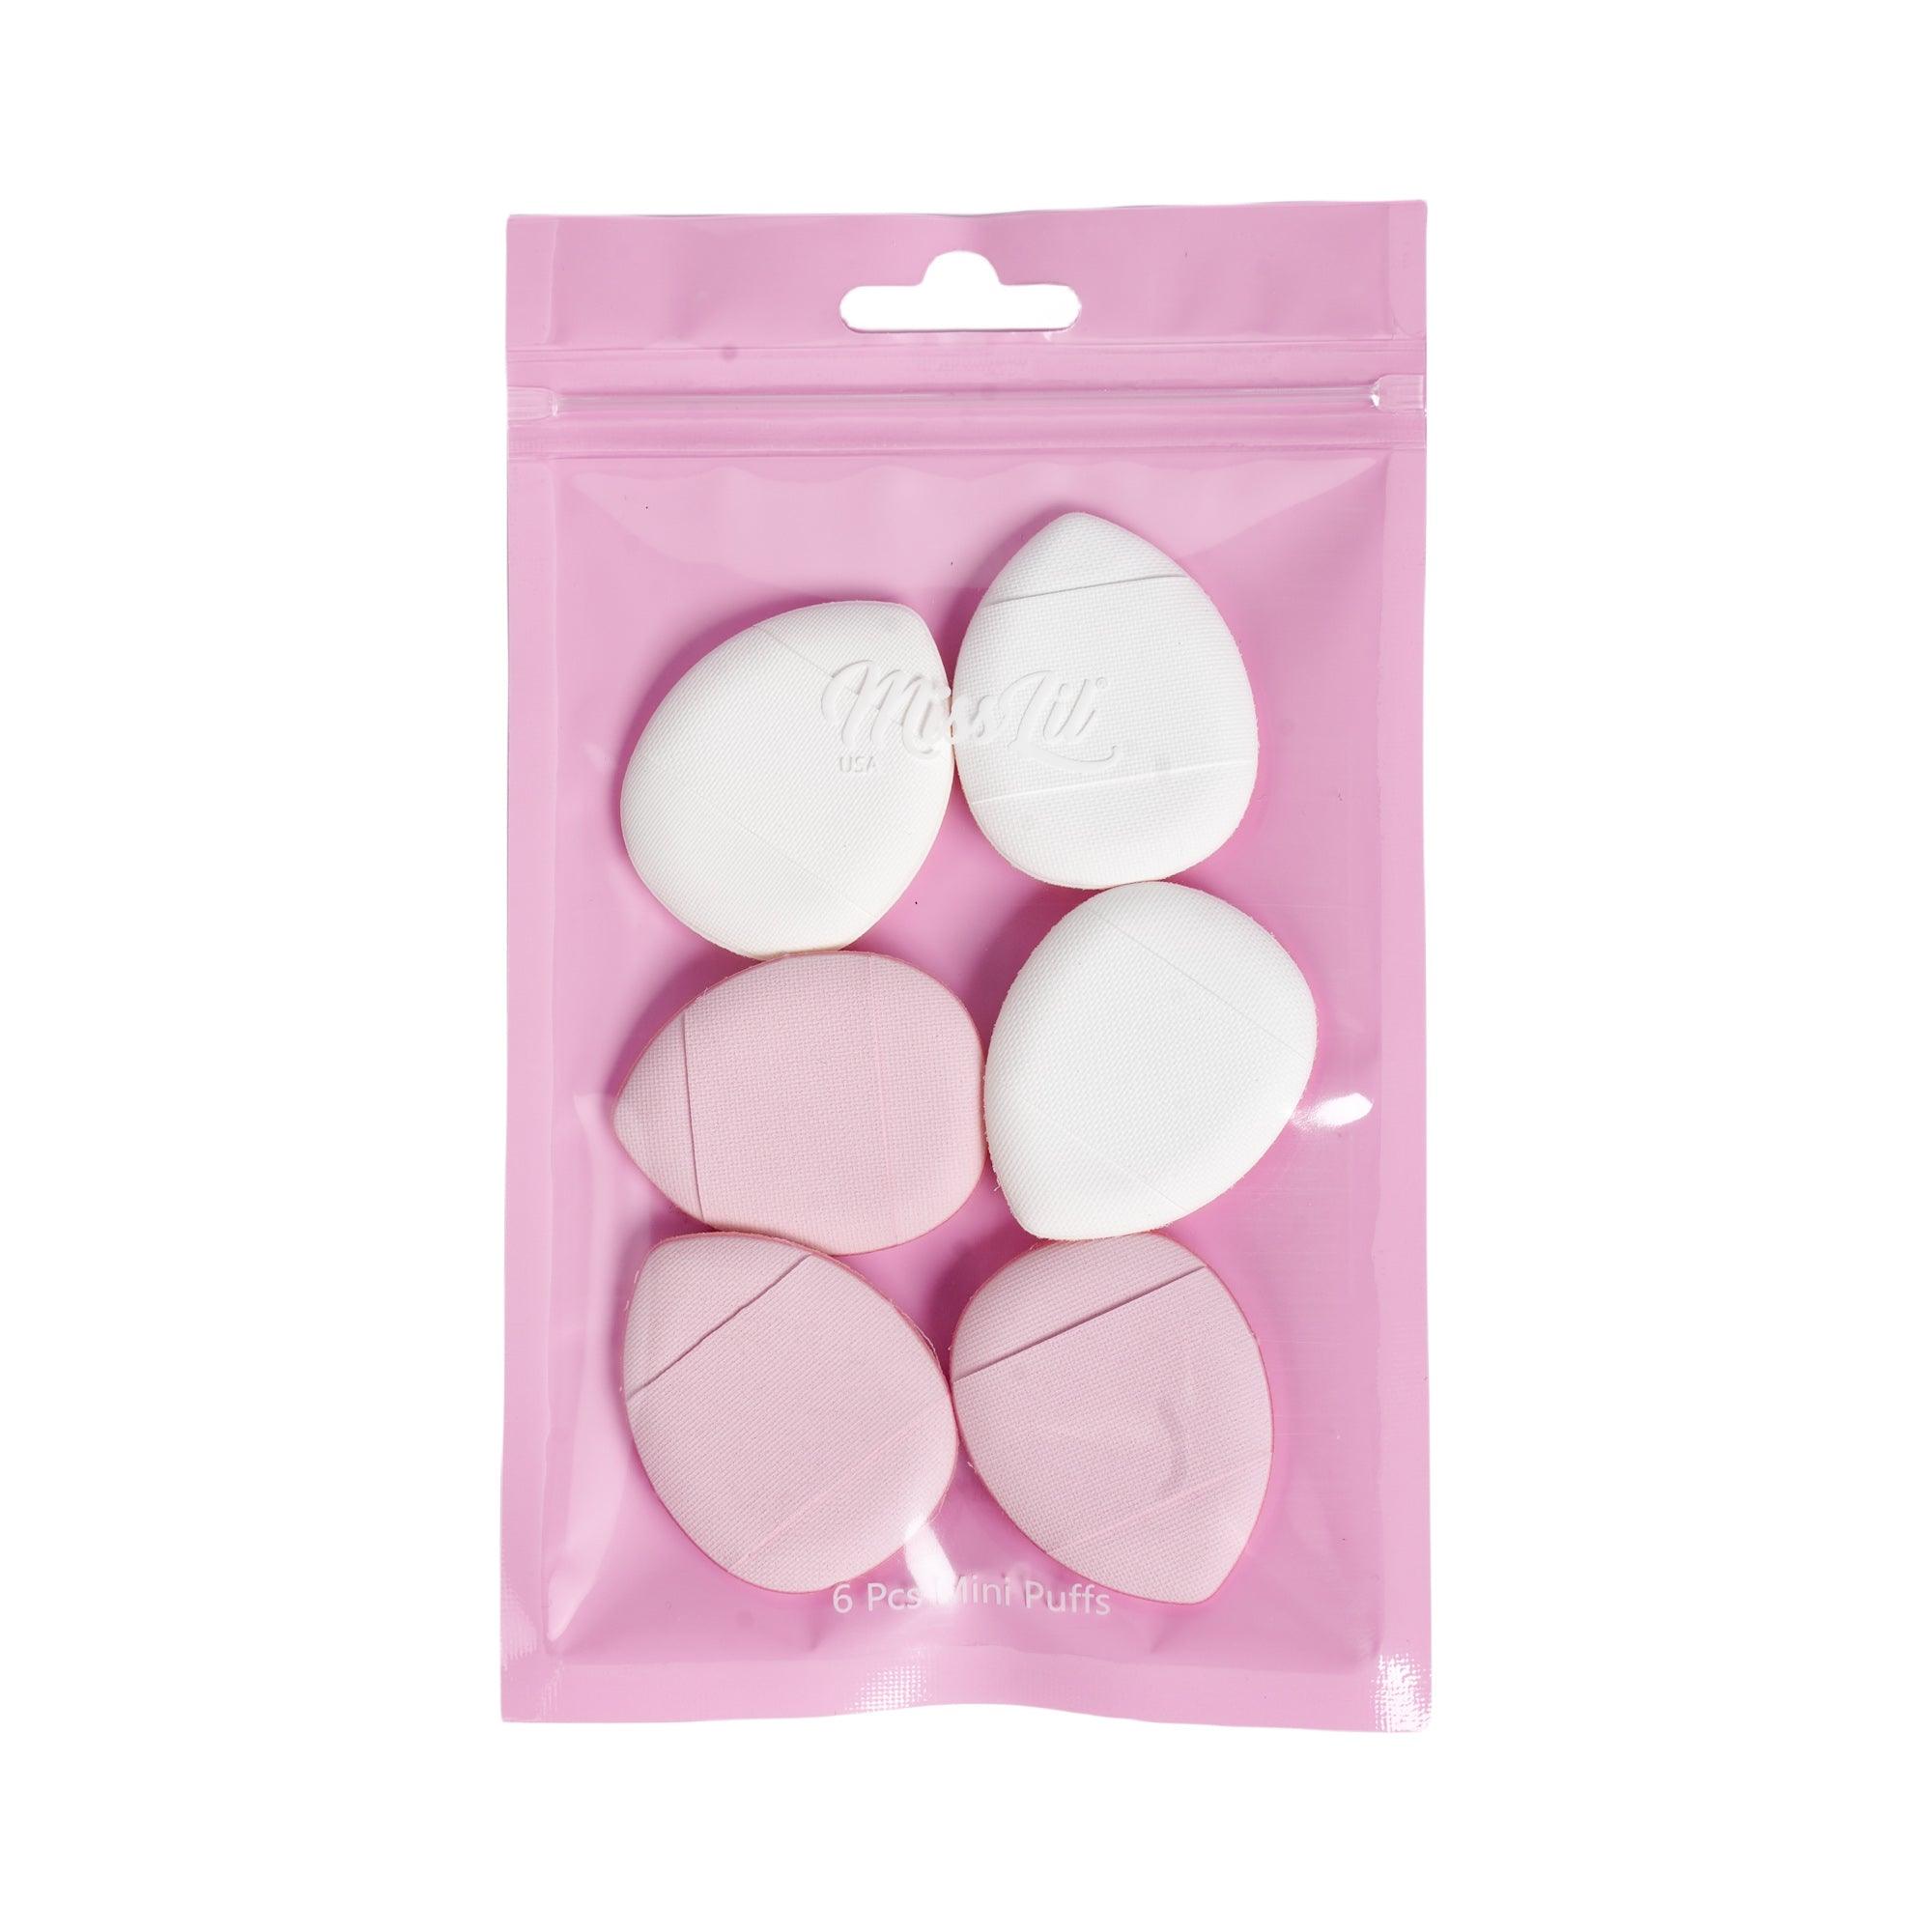 Mini triangle makeup Puffs-White-Pink - Miss Lil USA Wholesale